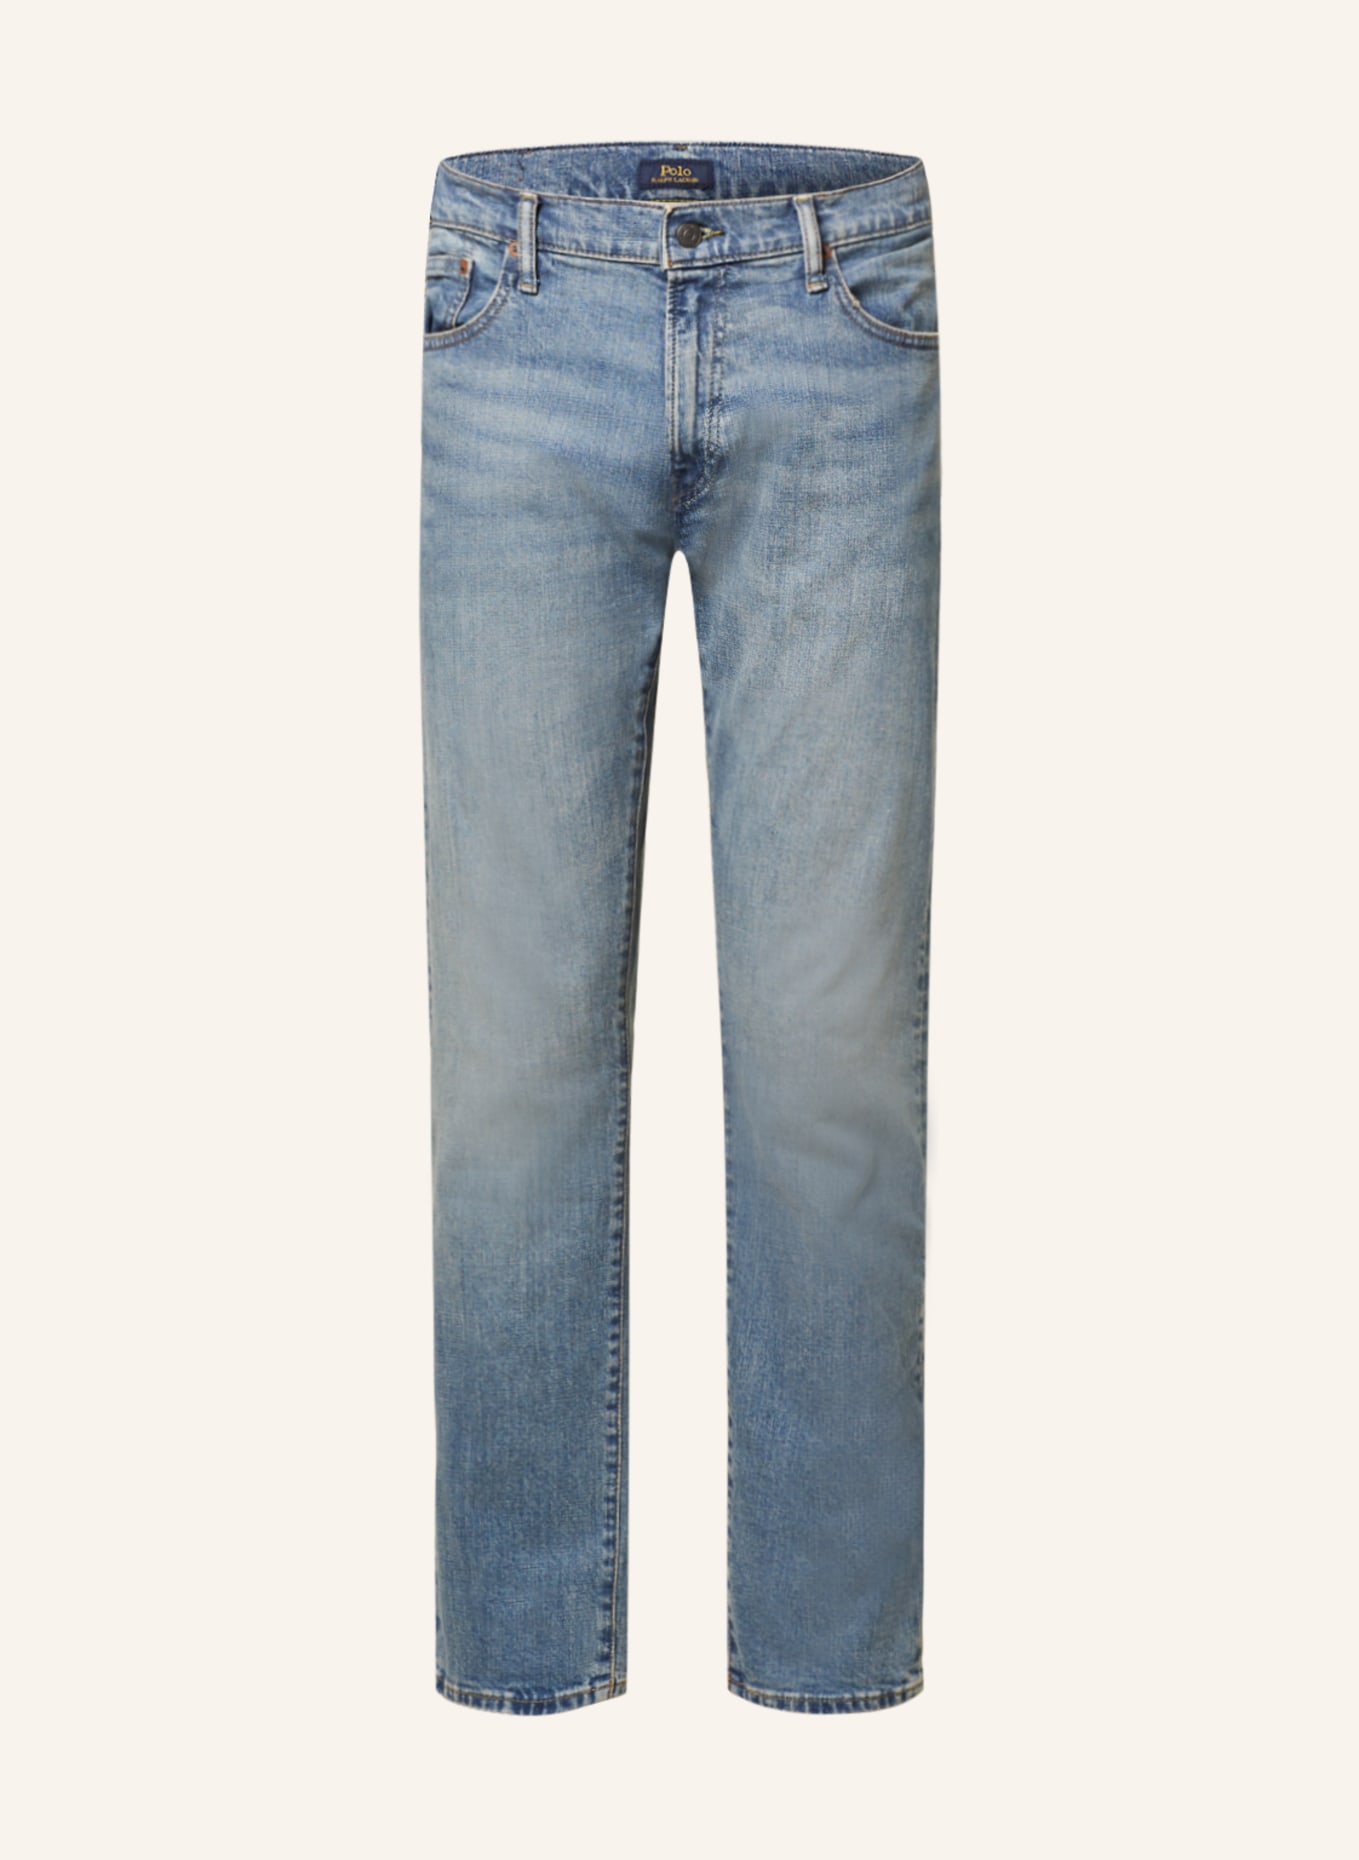 POLO RALPH LAUREN Jeans THE SULLIVAN SLIM Slim Fit, Farbe: 026 DIXON STRETCH BLUE (Bild 1)